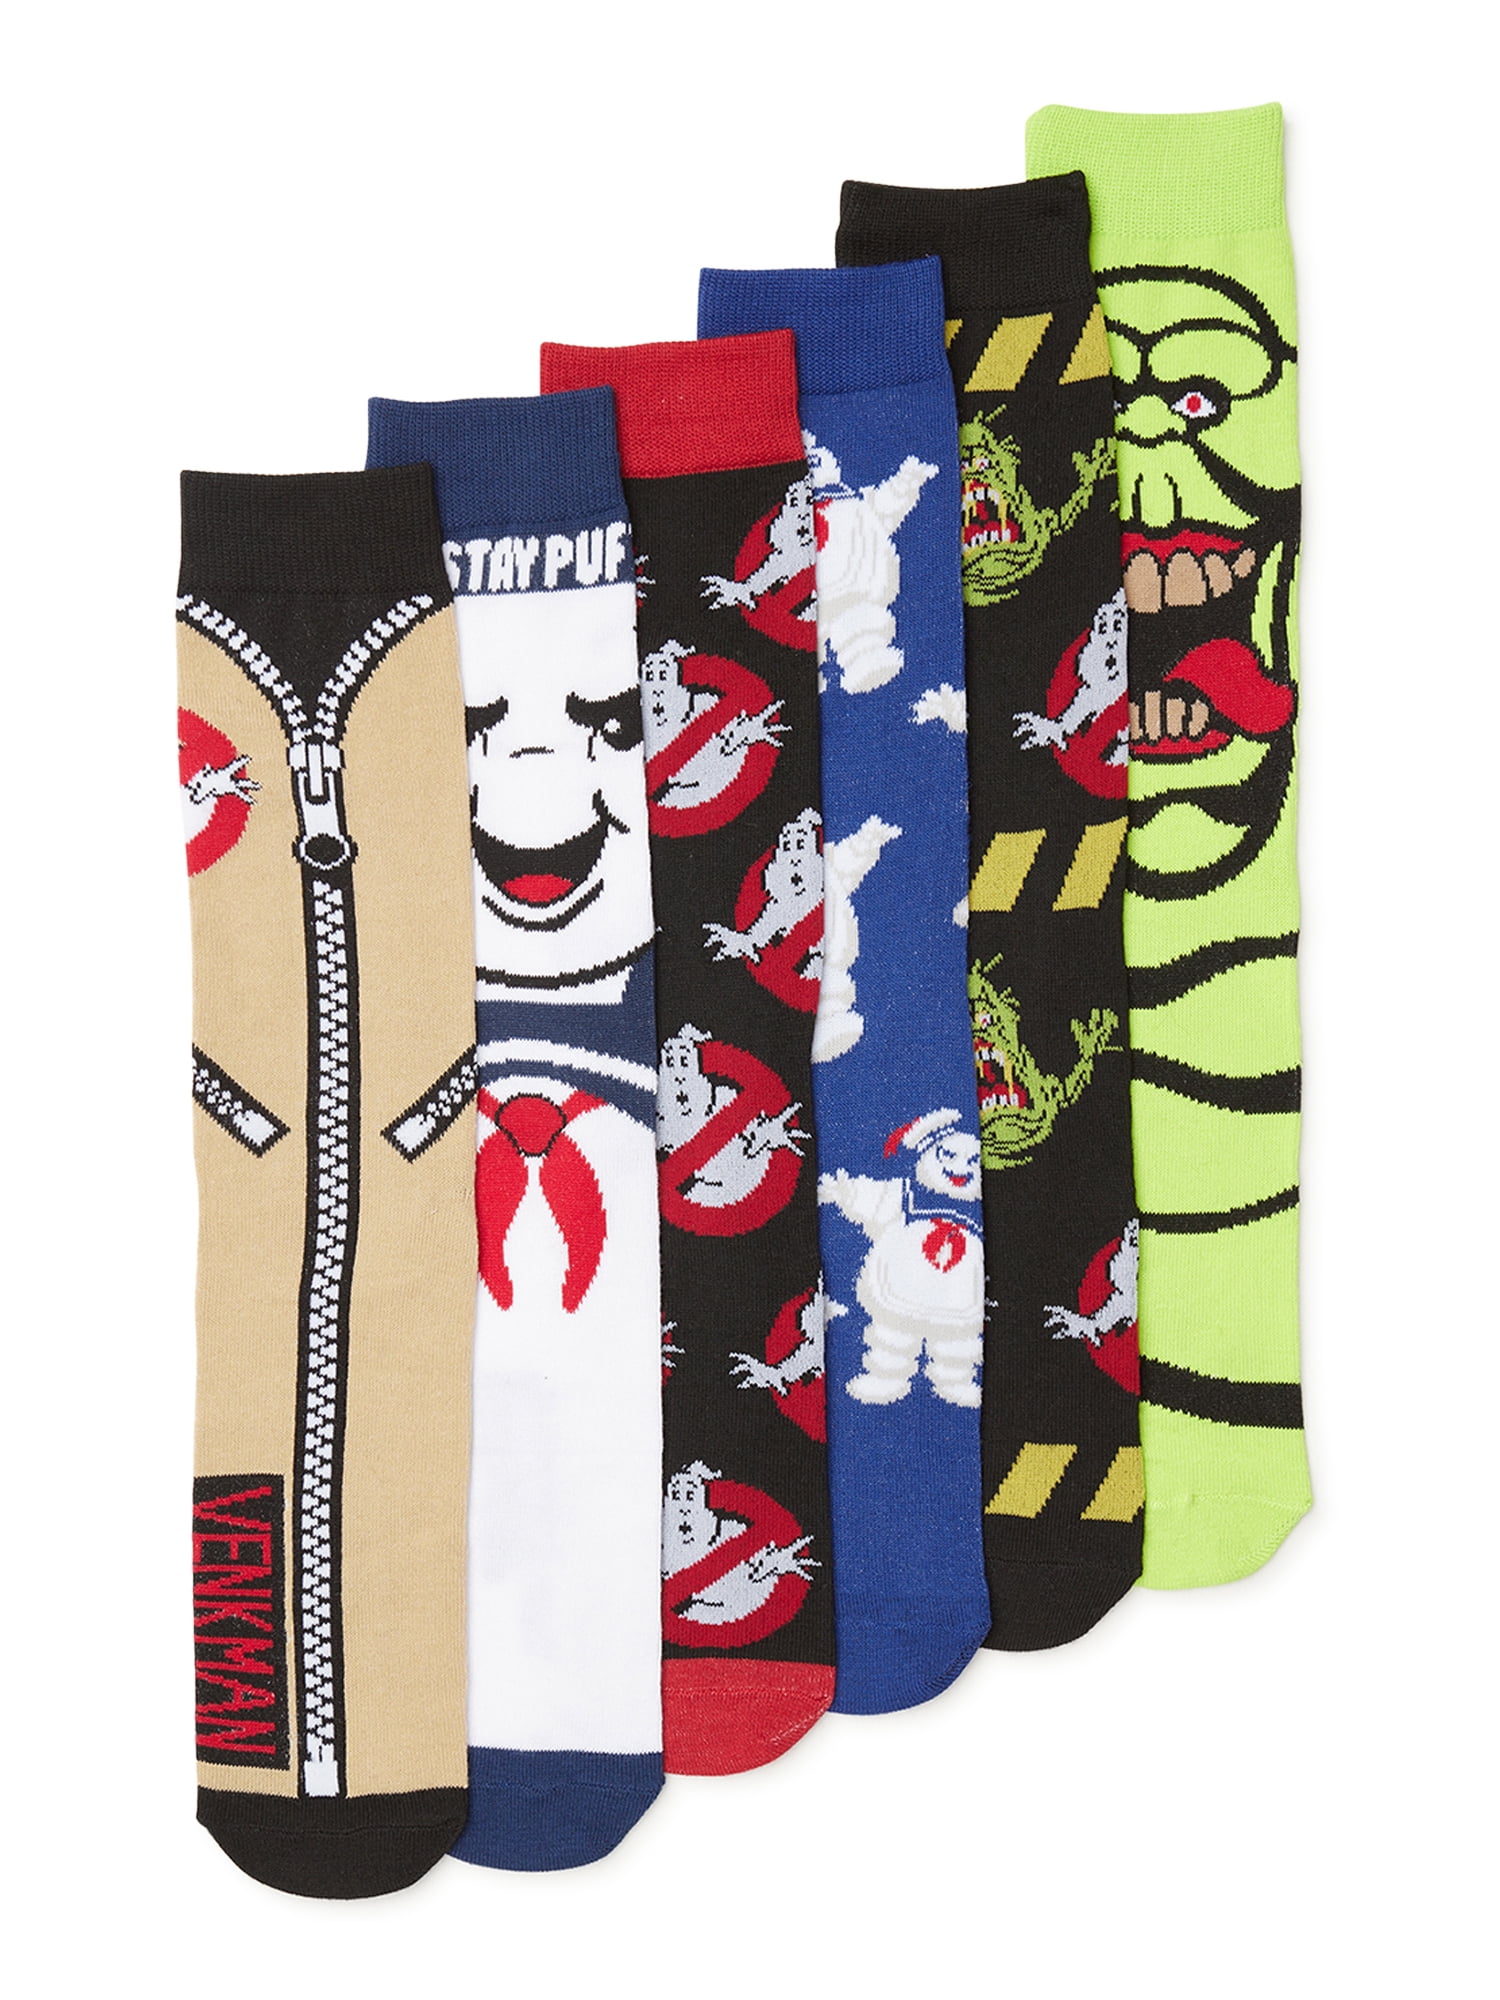 Odd Sox Crew Socks - Spengler & Zeddemore (Ghostbusters) – Super